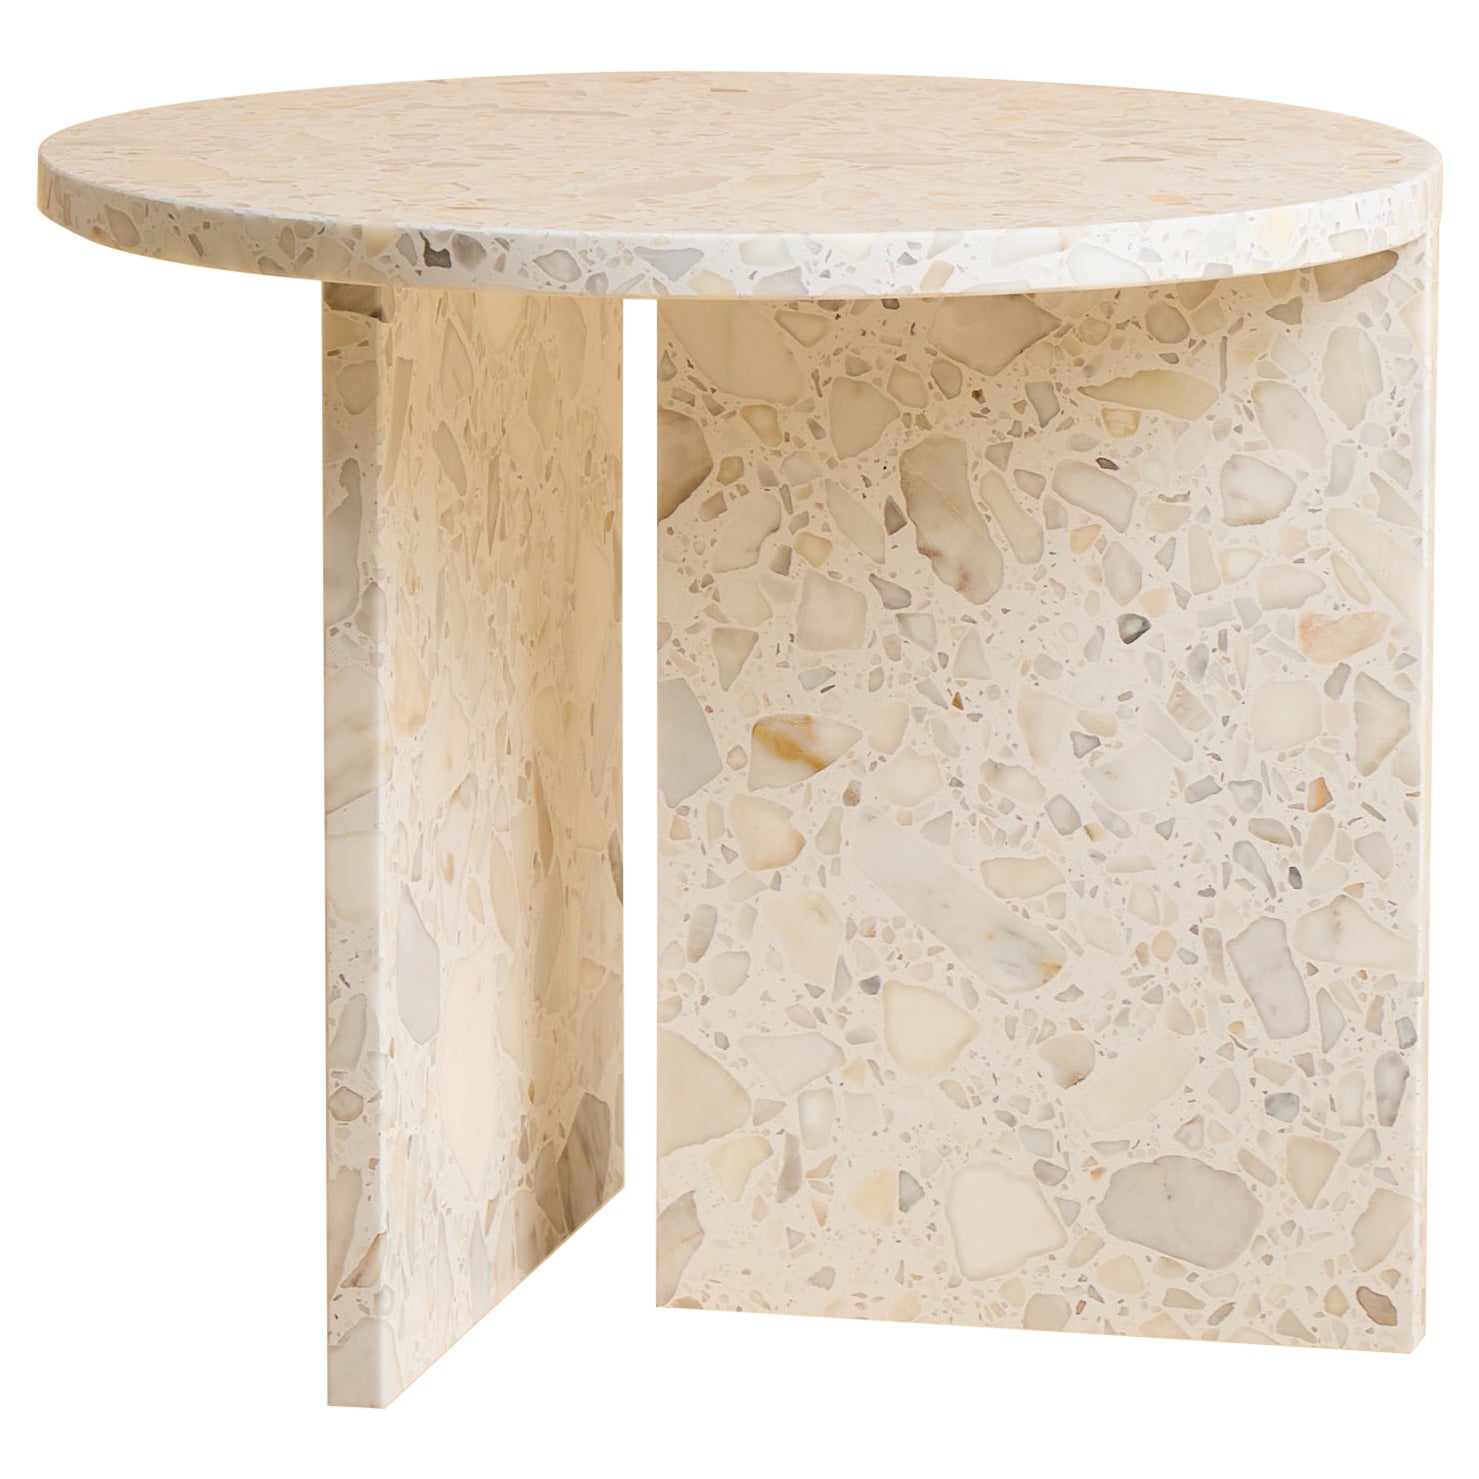 Table basse circulaire en marbre de Carrare et terrazzo, fabriquée en Italie en vente